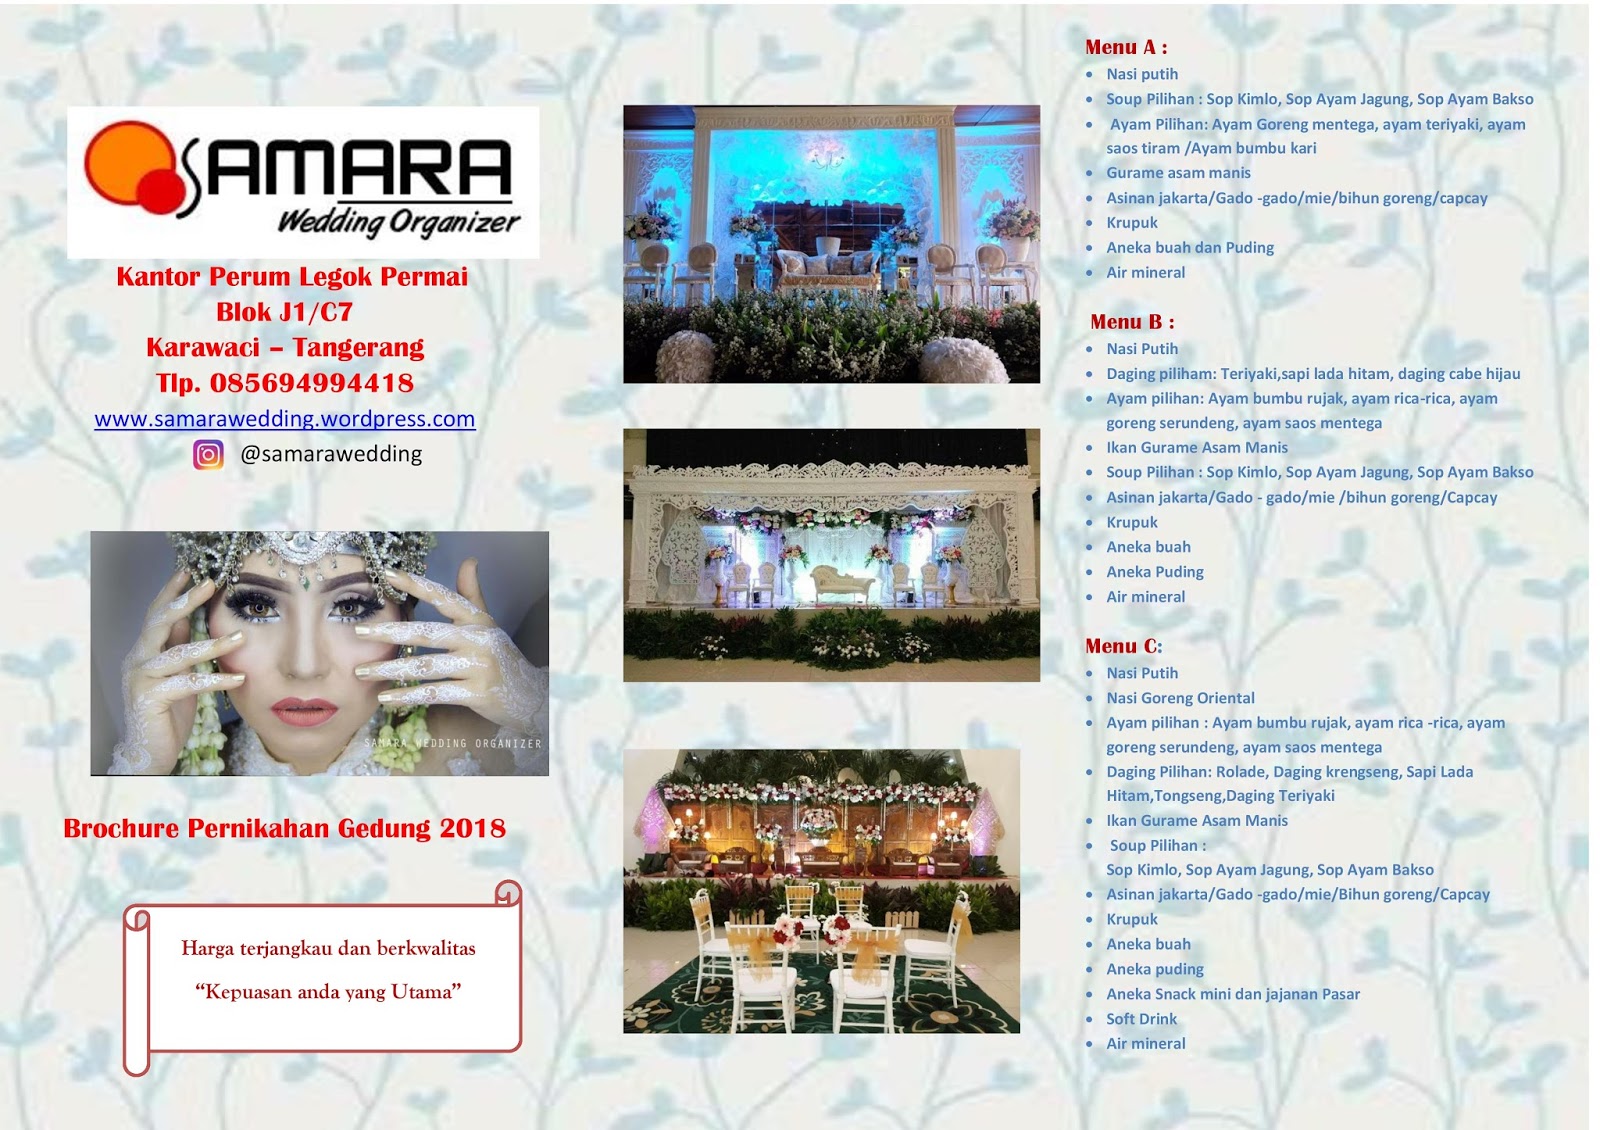 SAMARA Wedding Organizer